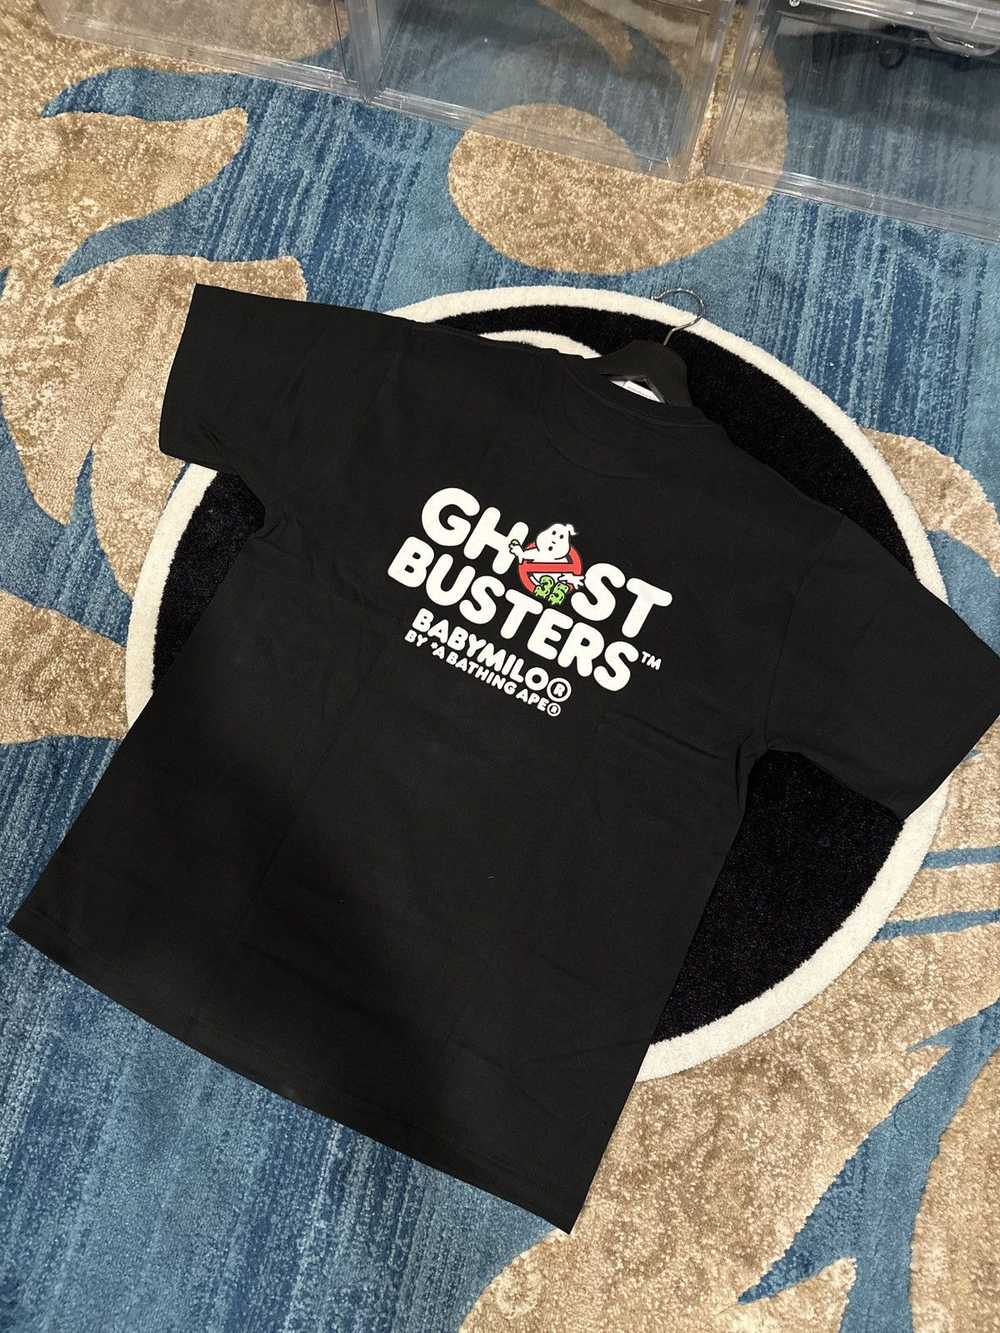 Bape Bape x Ghostbusters 35th Anniversary Tee - image 2